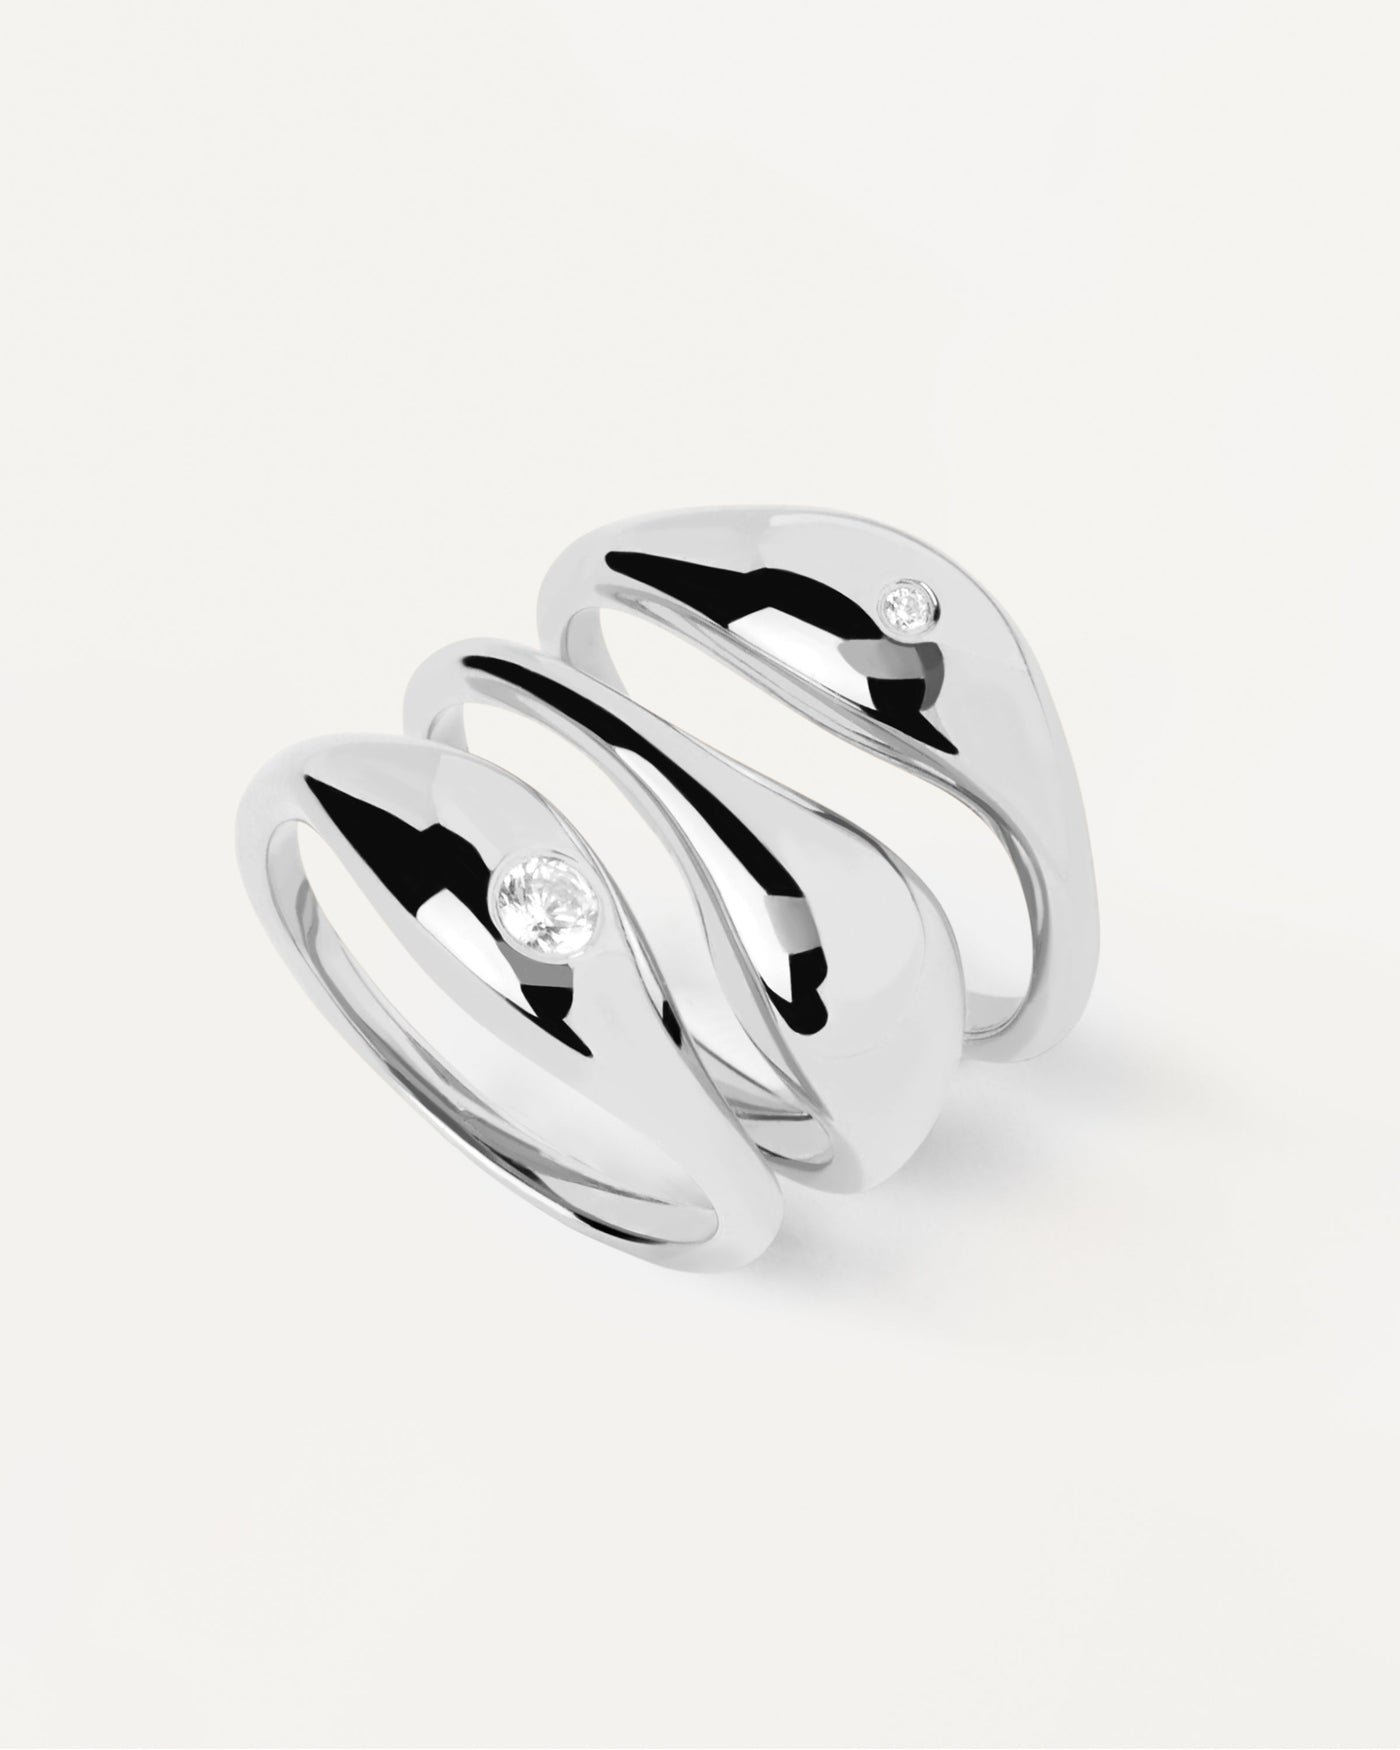 Modern Premium Quality Silver Look Like Rings, Adjustable at best price in  Ghaziabad